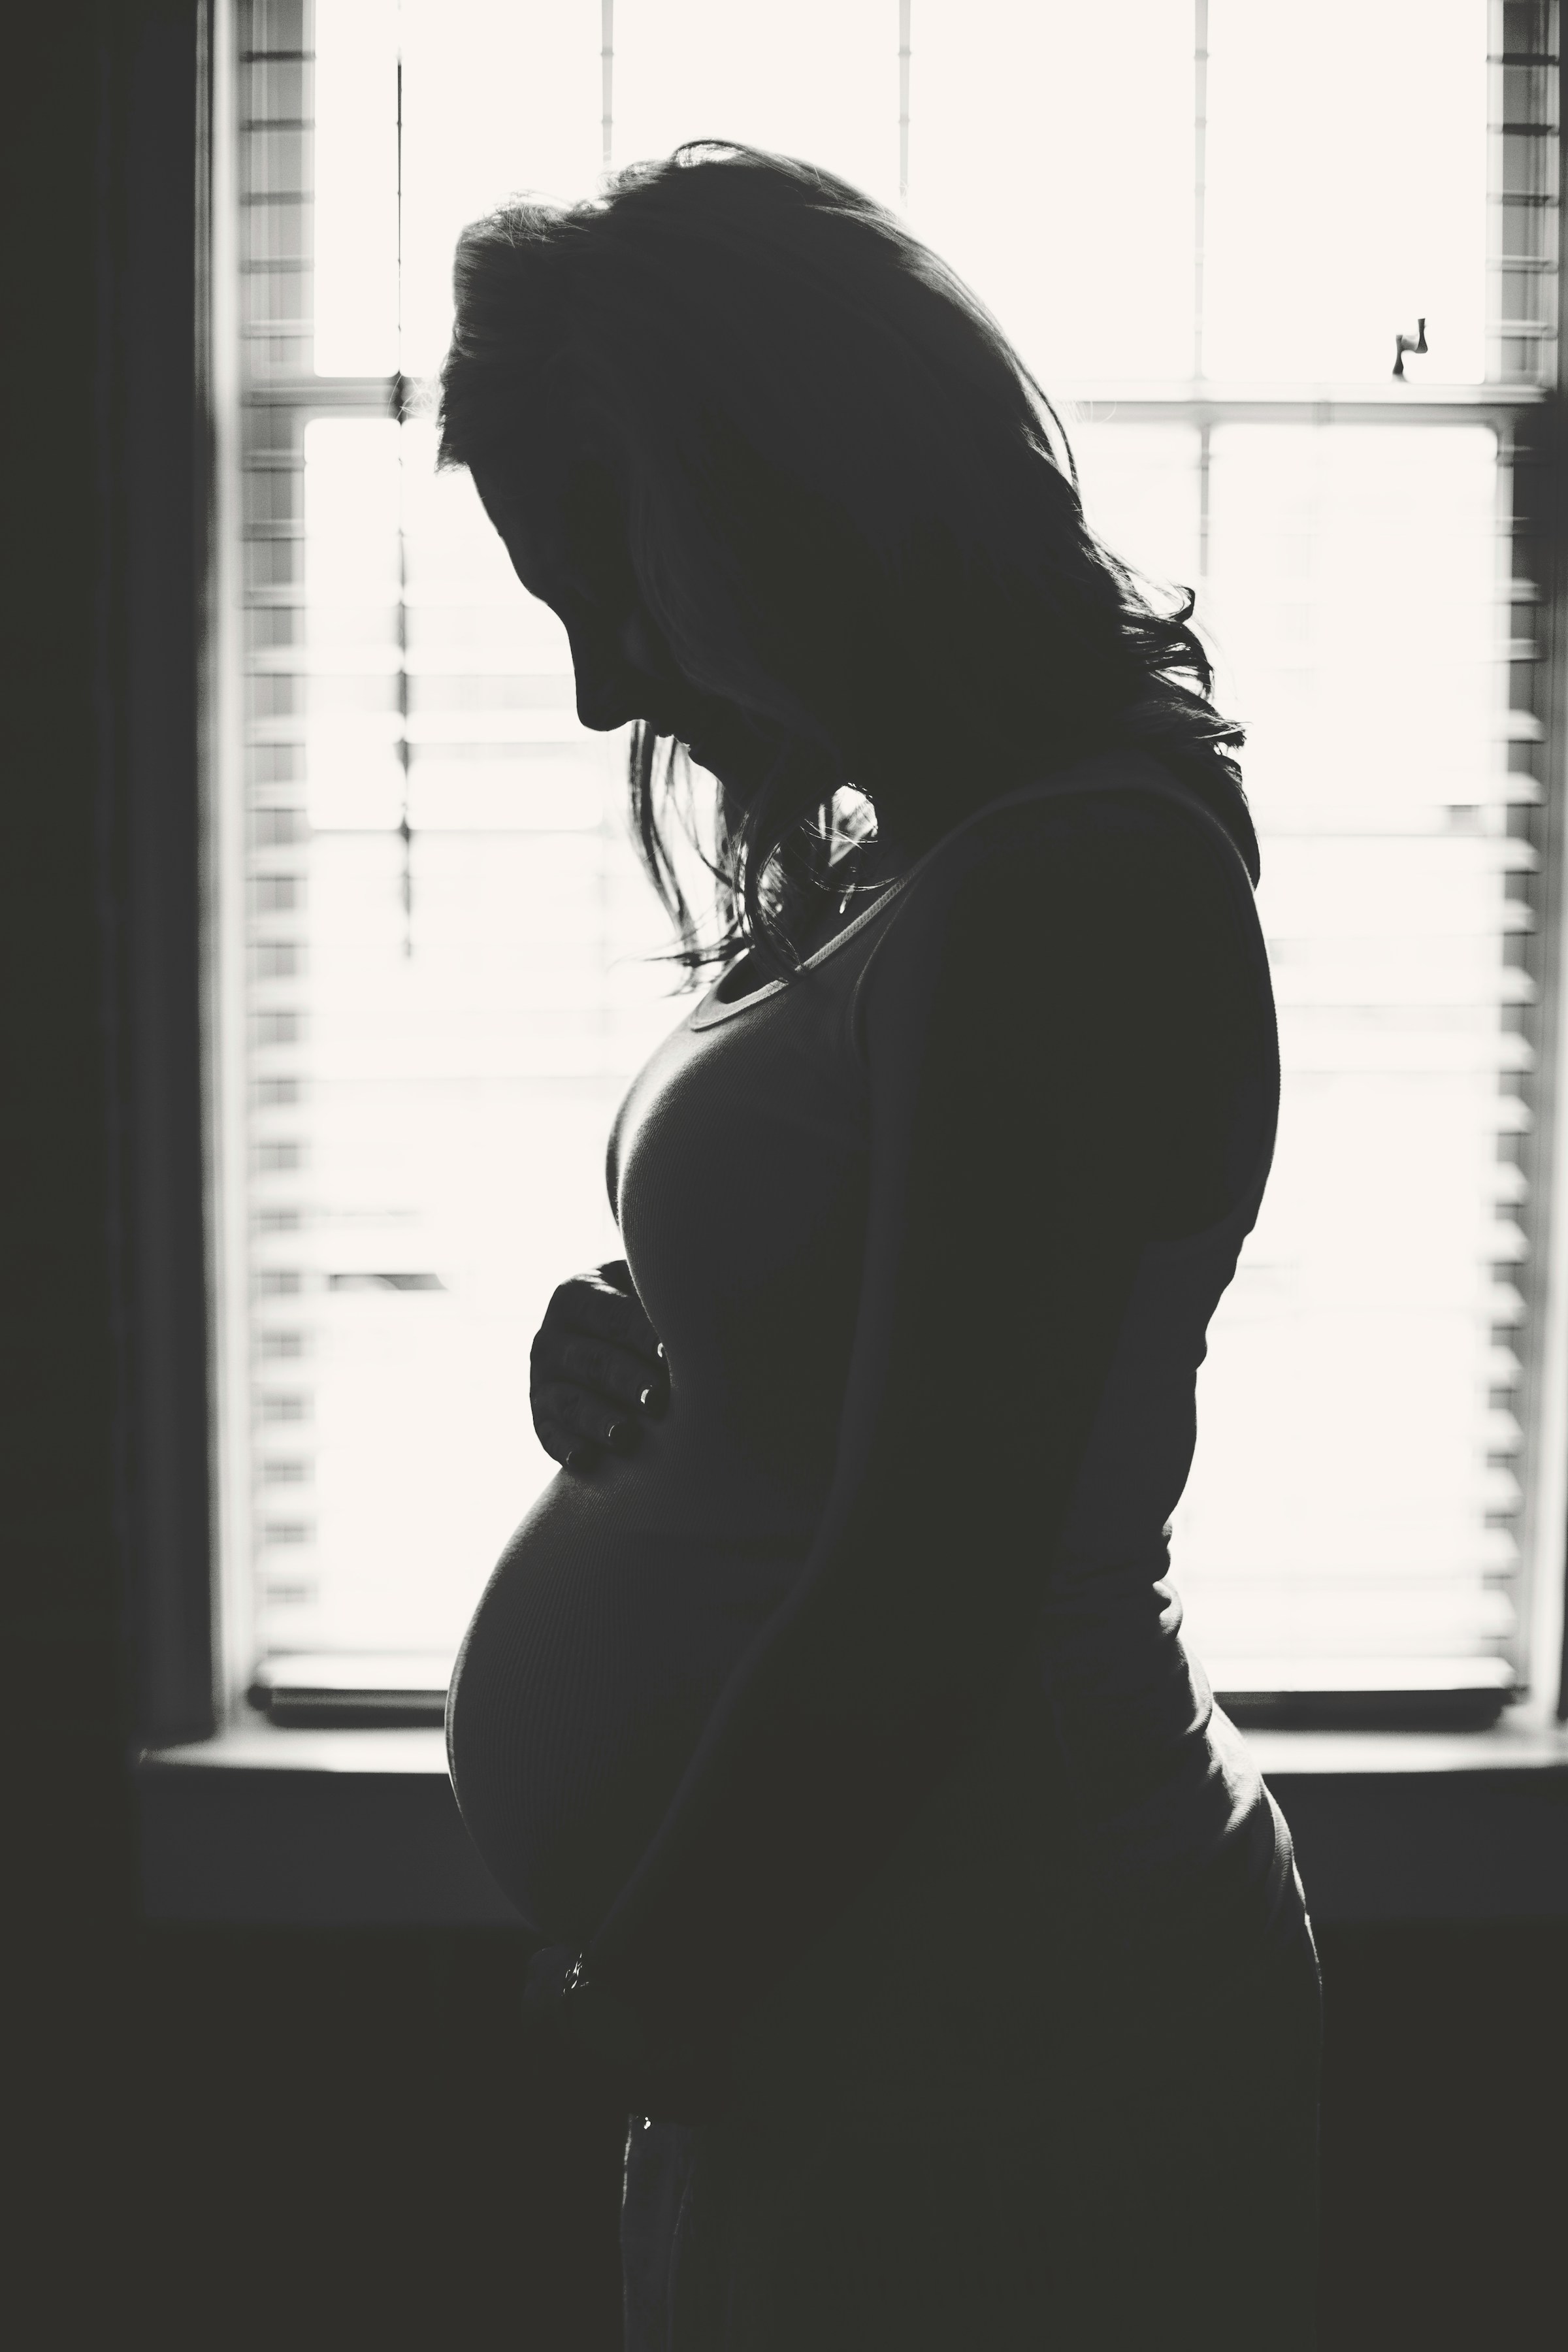 Sylvia is pregnant | Source: Unsplash